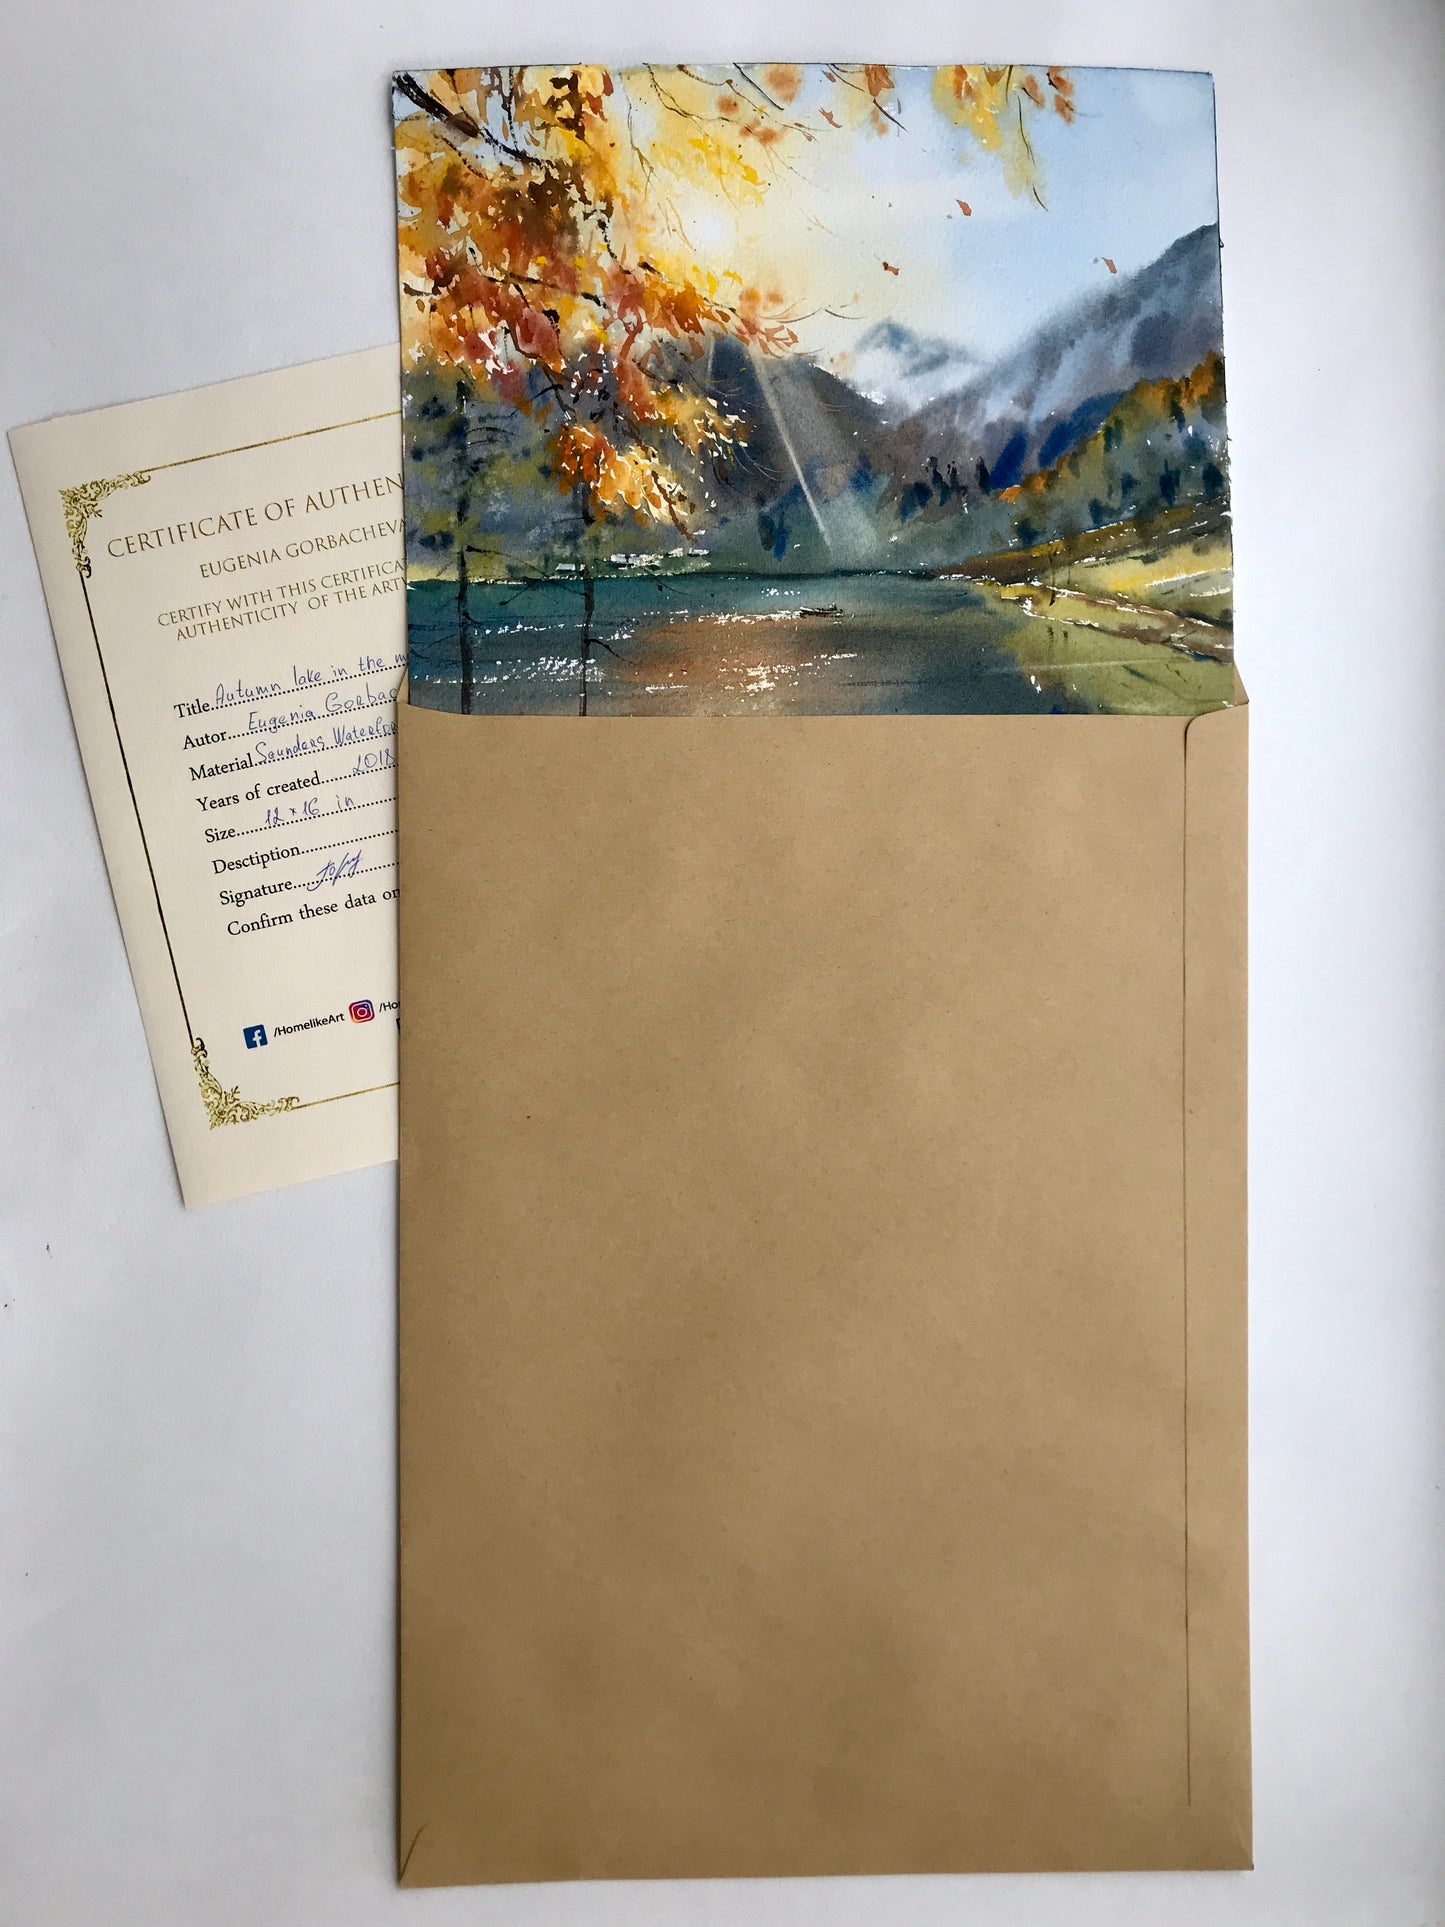 Aurora Painting Original, Watercolor Northern lights, Winter Landscape, Frozen Lake, Norwegian Wall Art, Christmas Gift